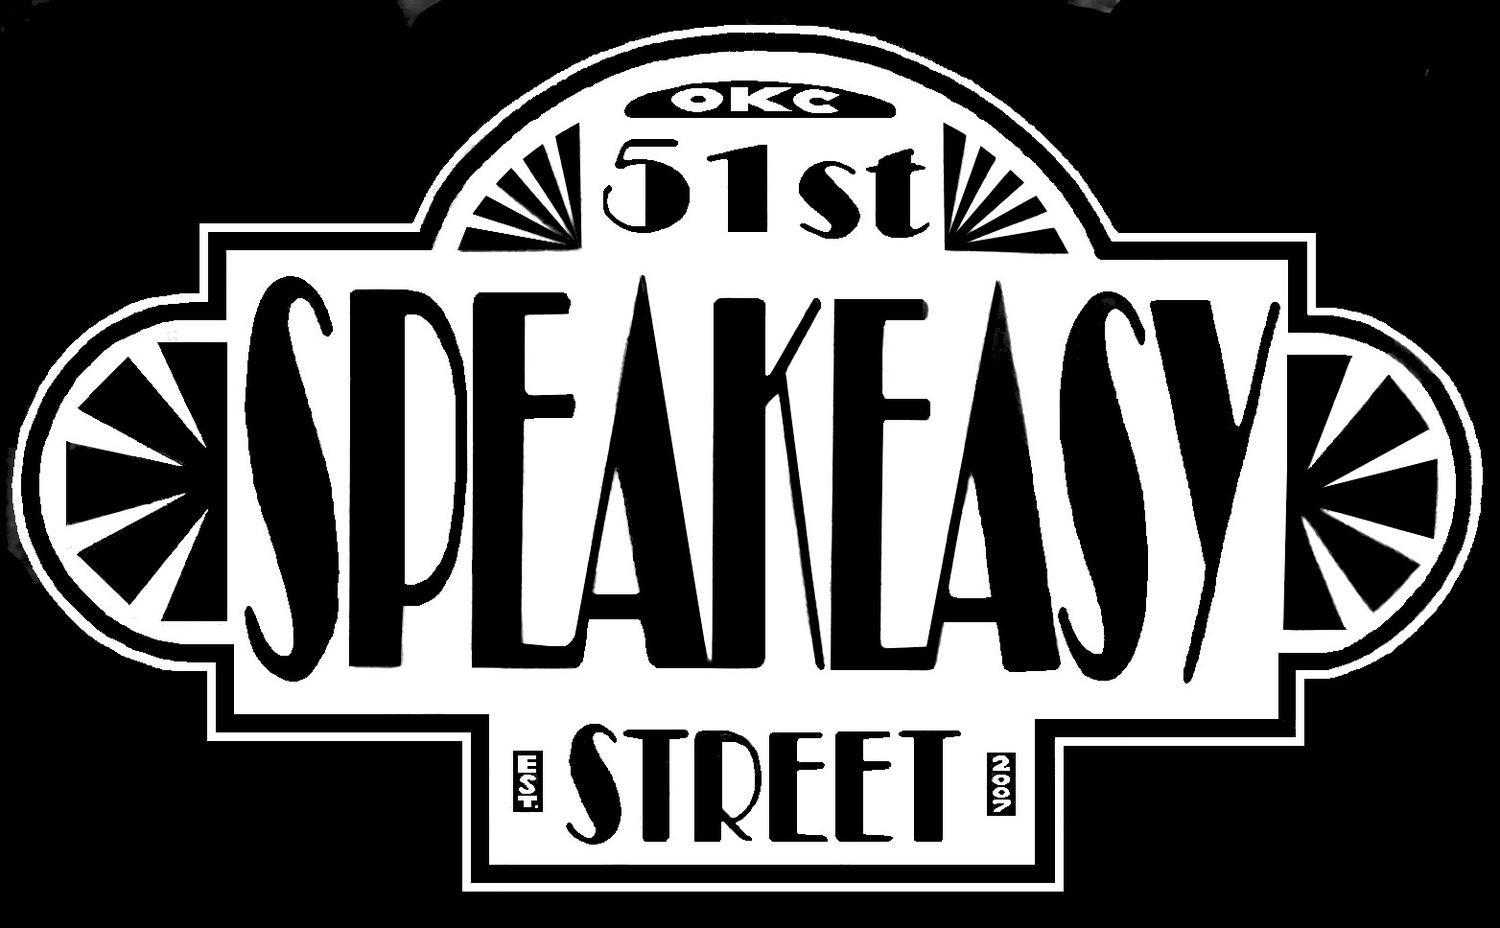 51st Street Speakeasy